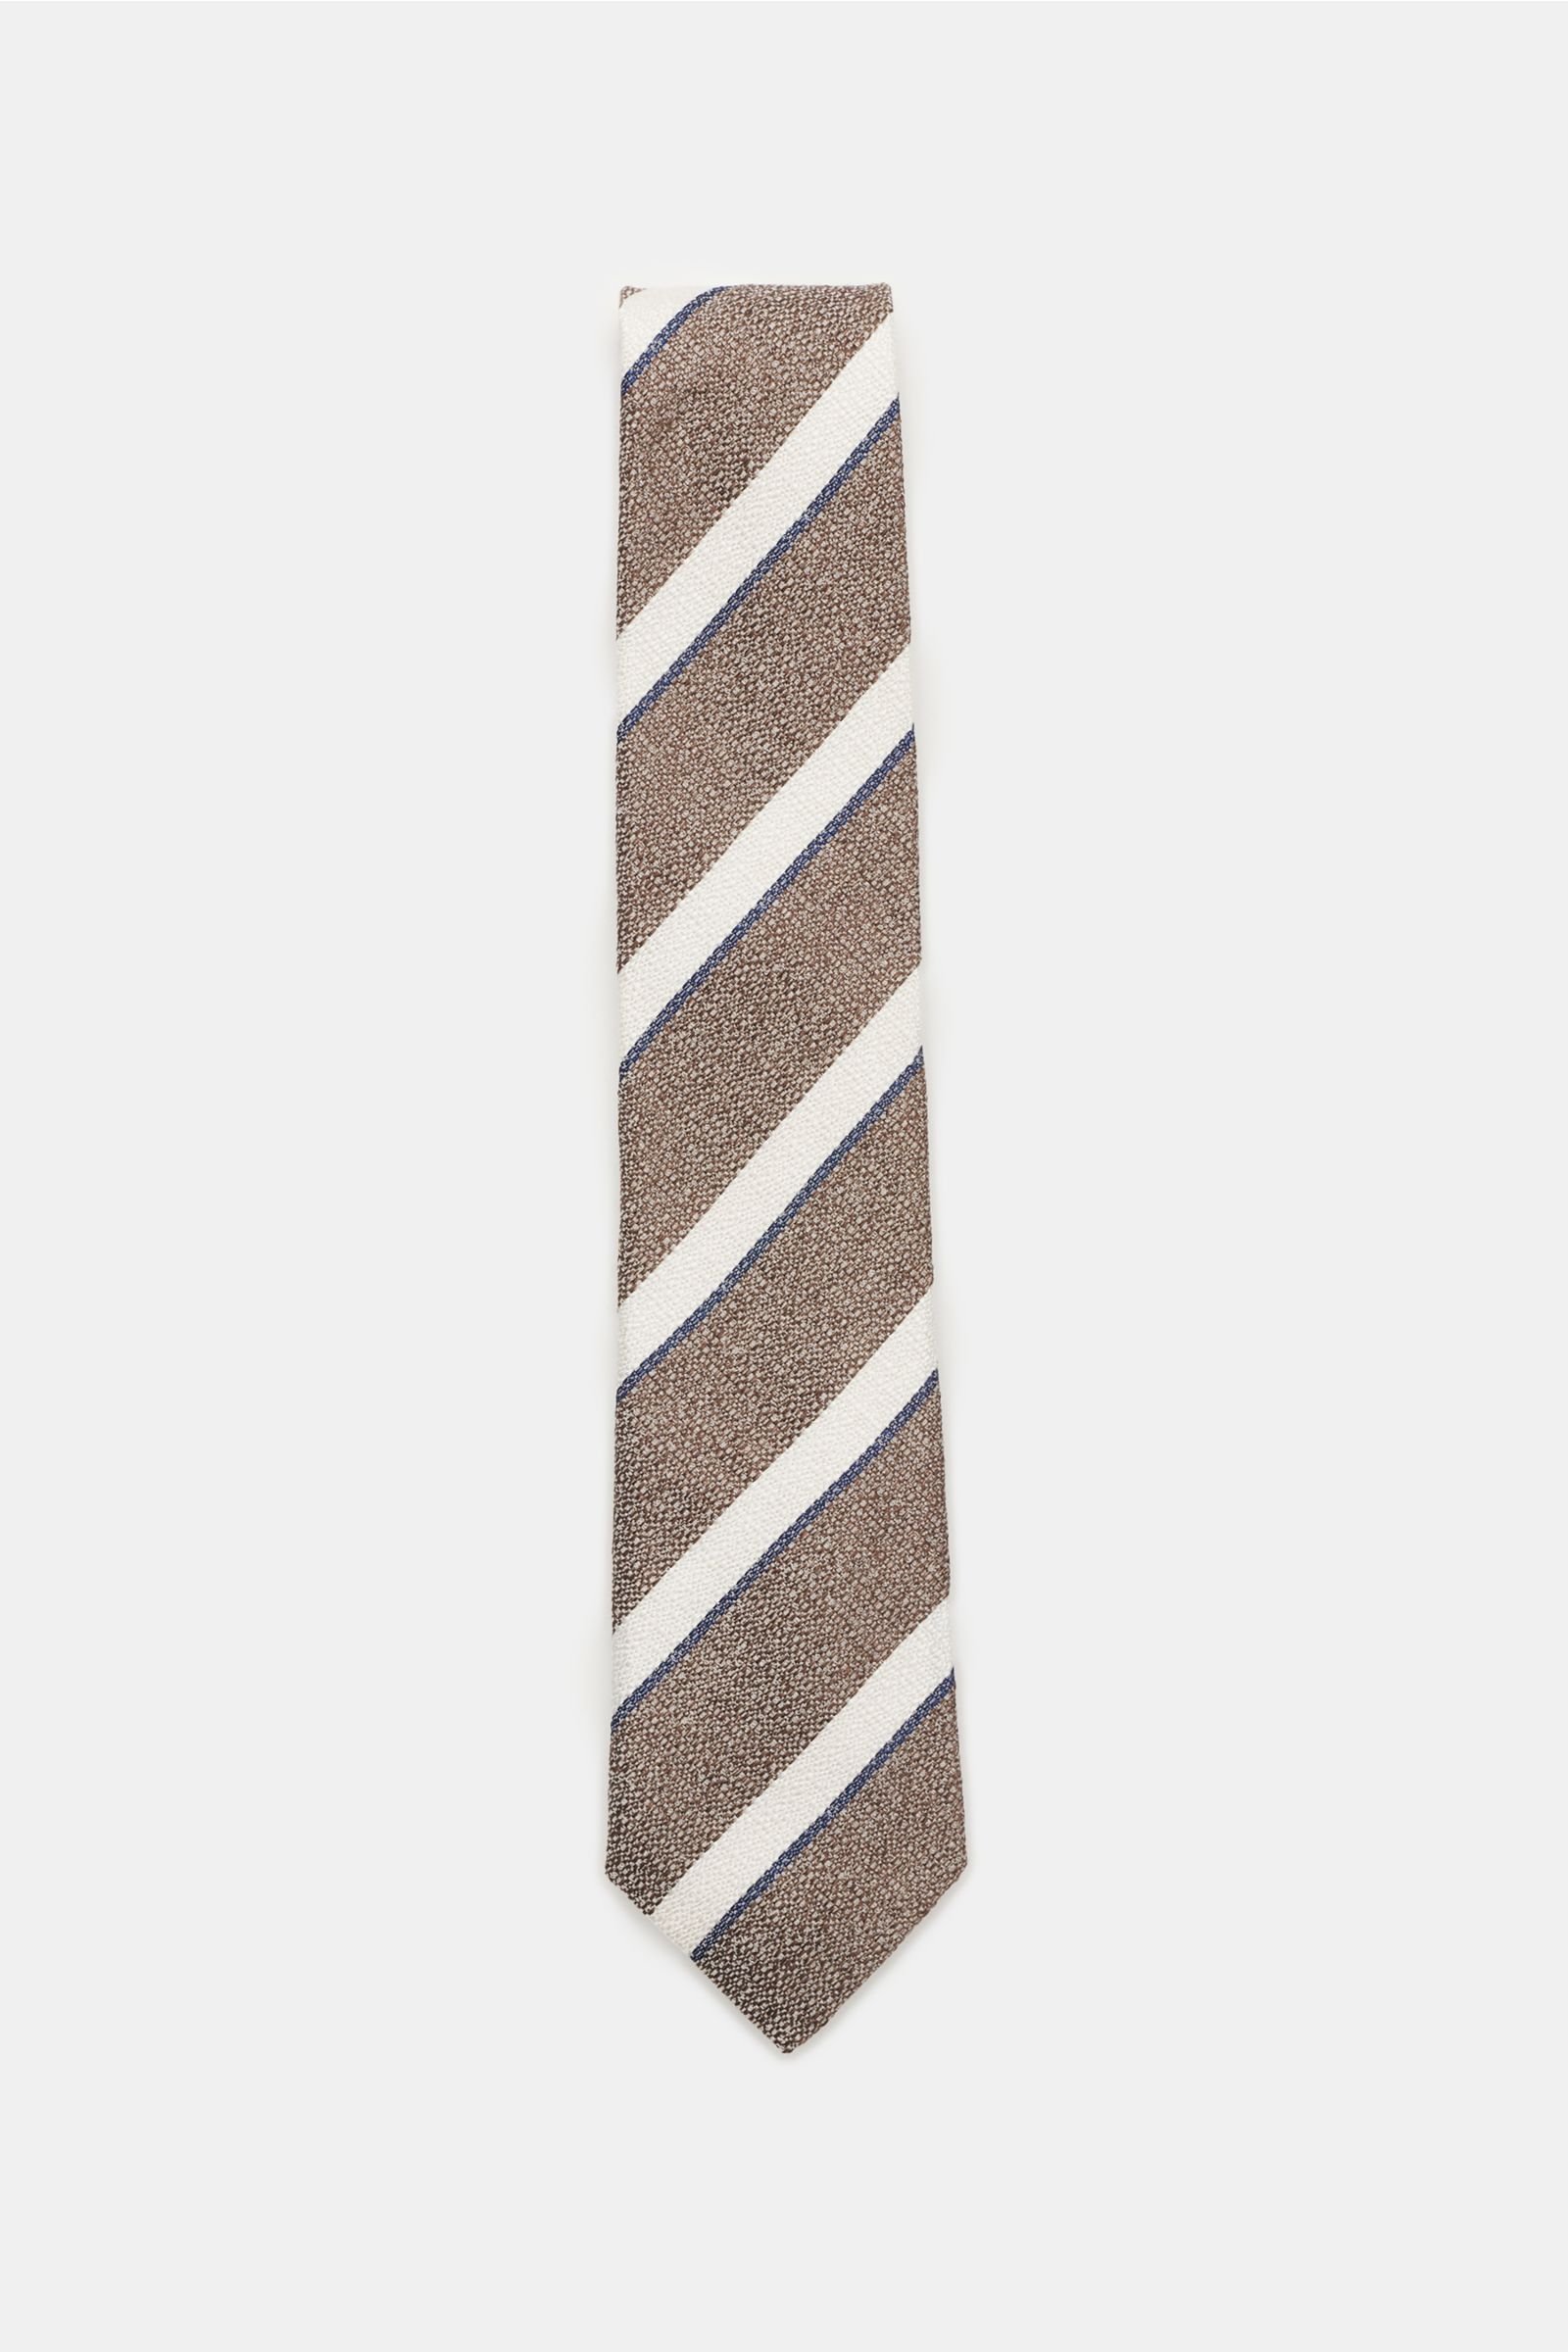 Tie grey-brown/white striped